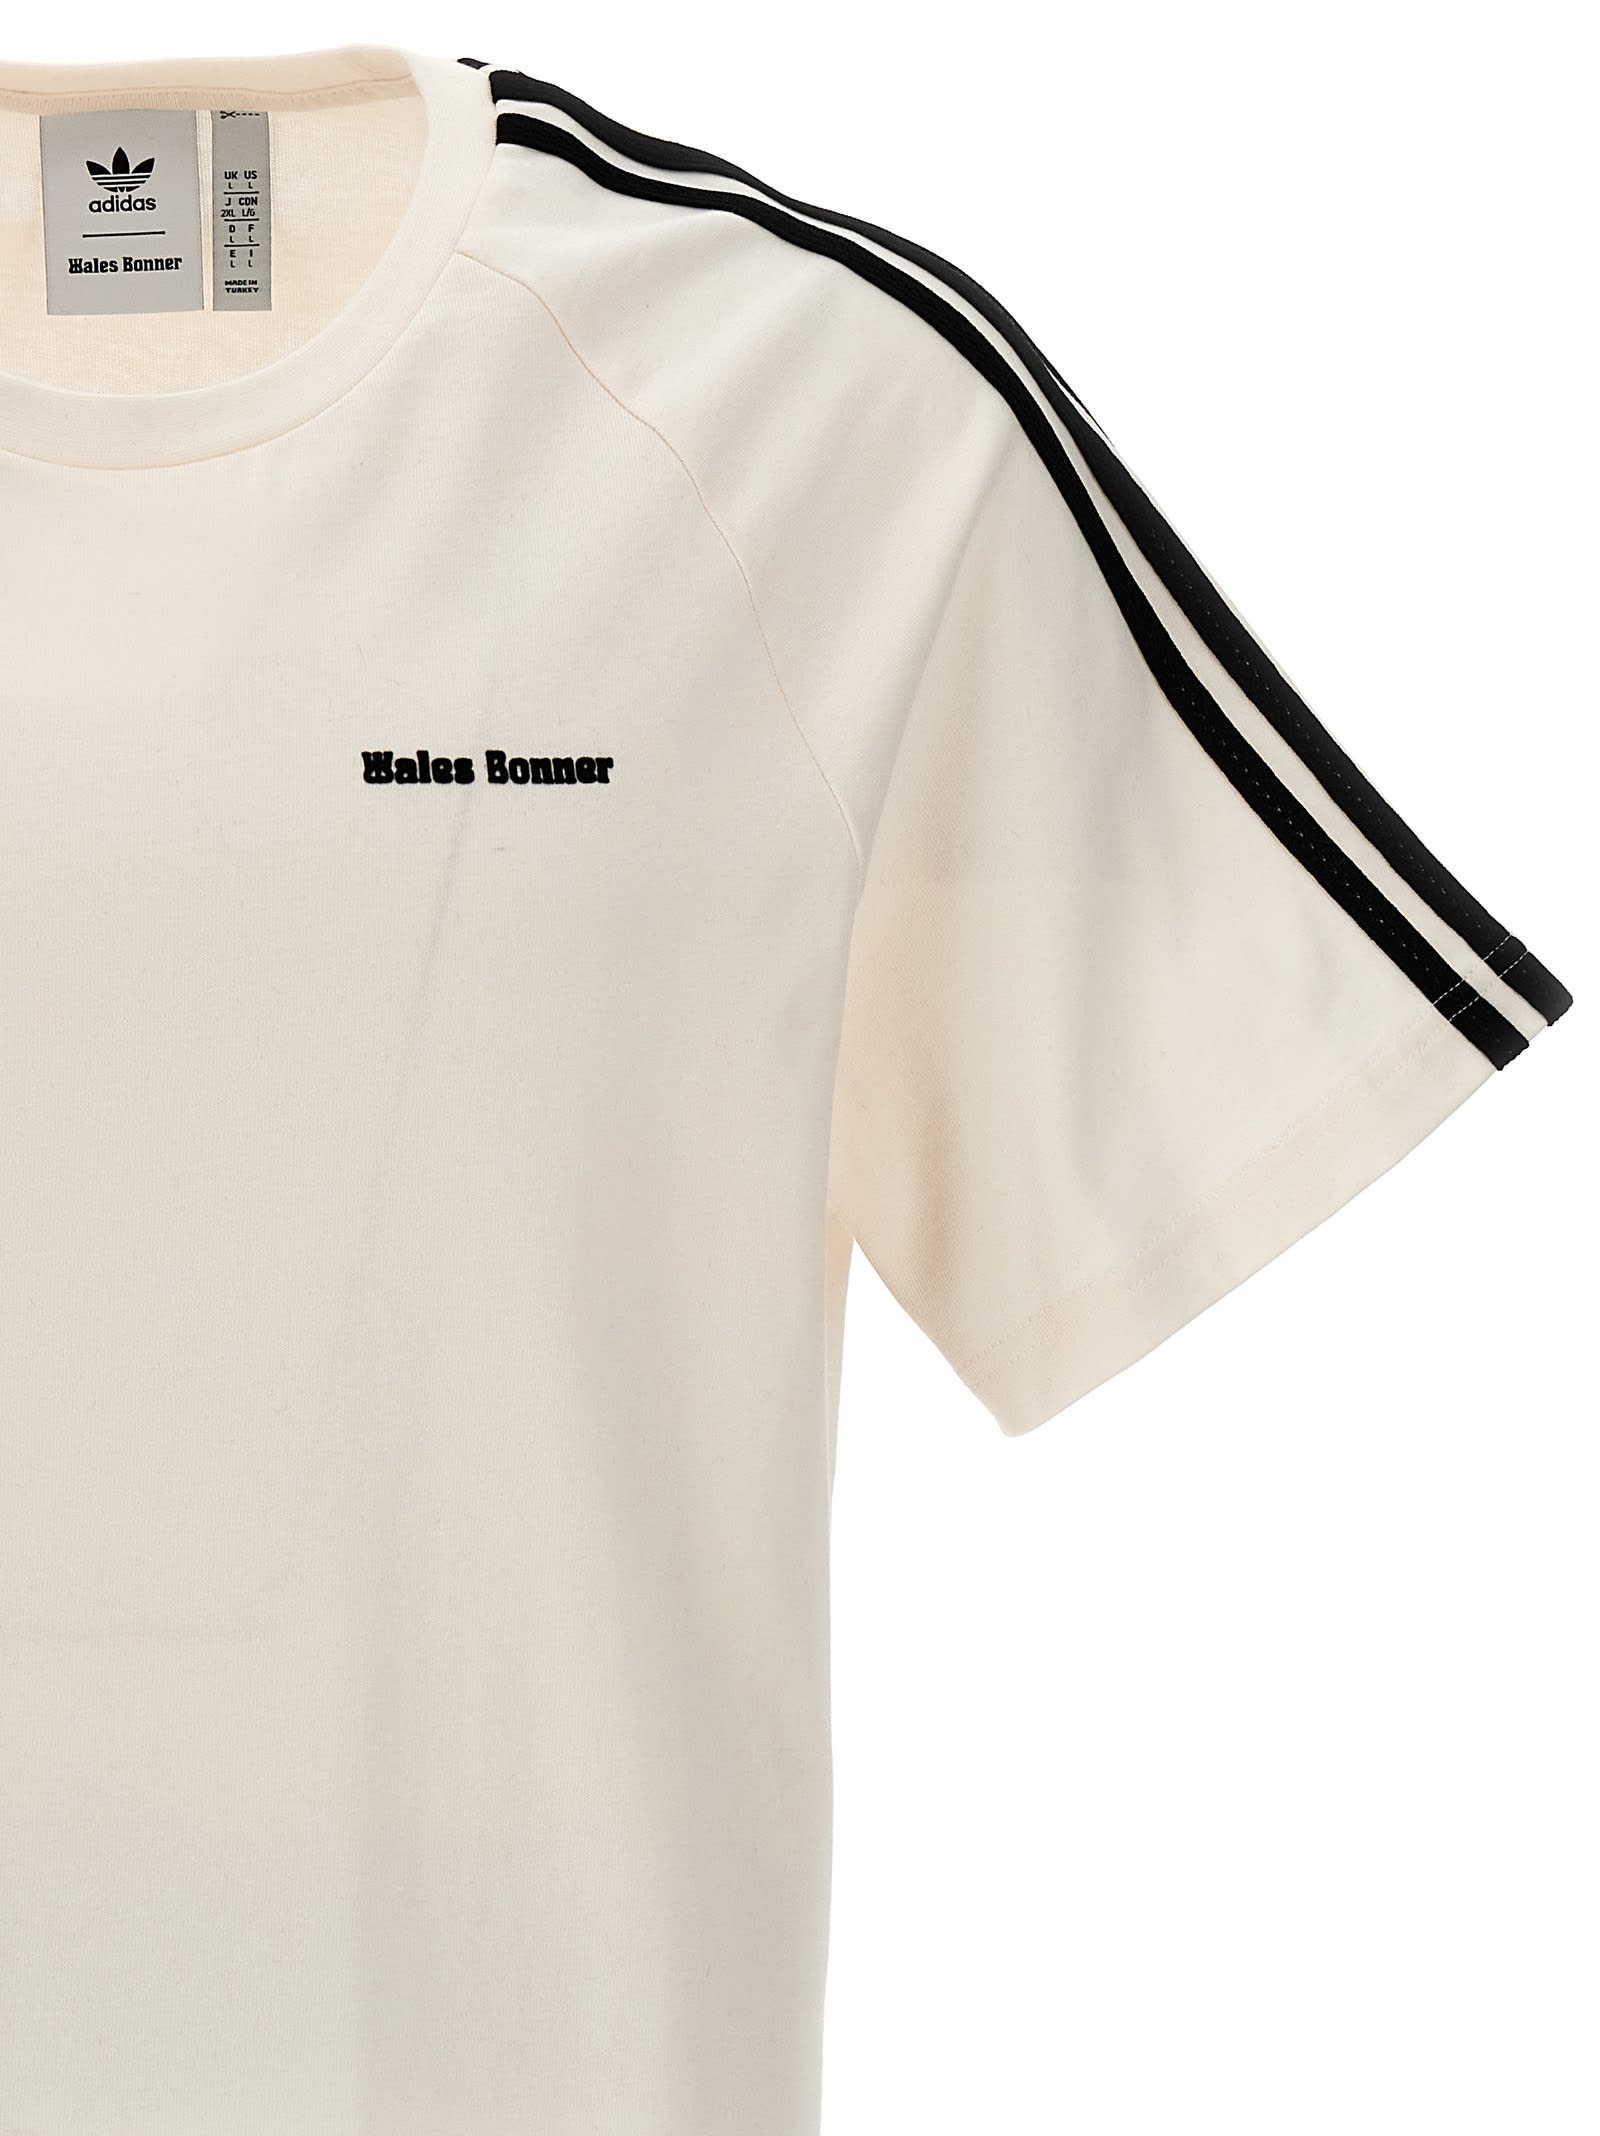 Shop Adidas Originals By Wales Bonner T-shirt X Wales Bonner In Chalk White